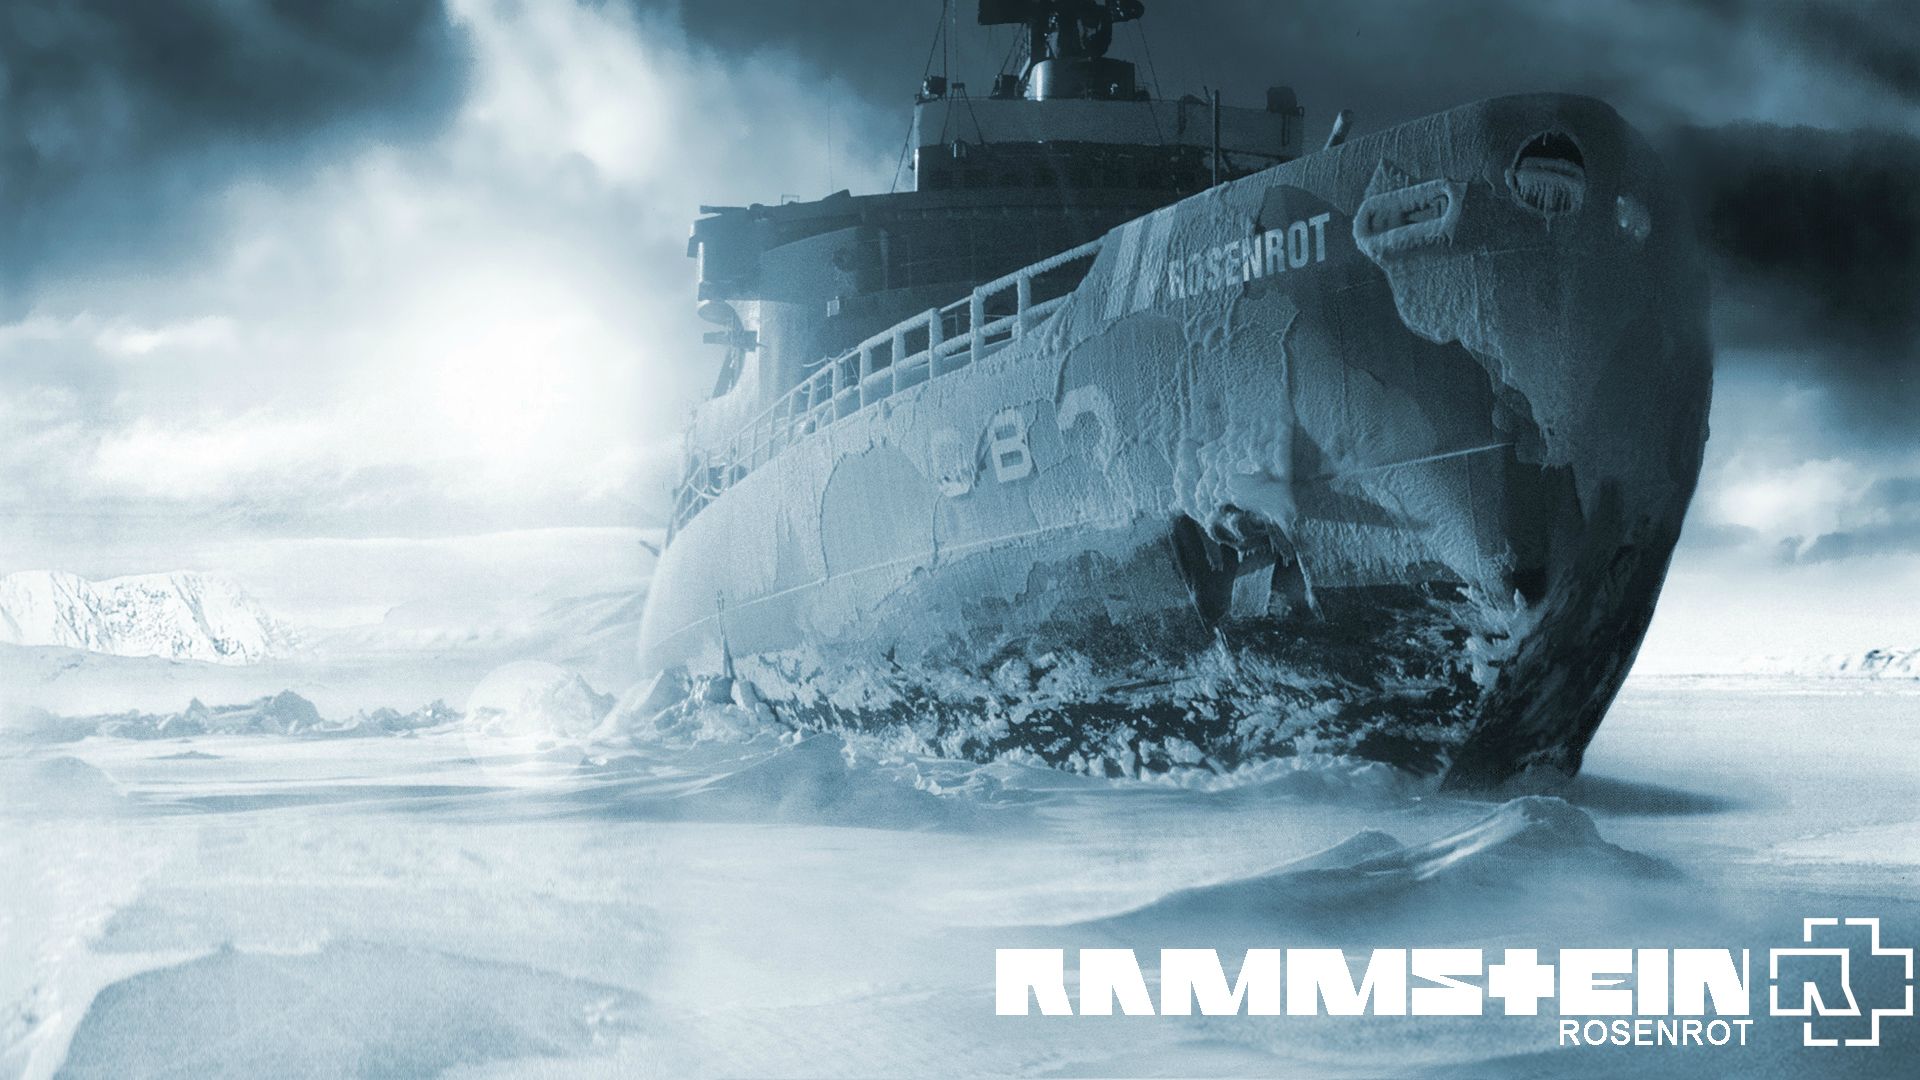 Rammstein Germany Music Album Ice Ship Shipwreck 1920x1080